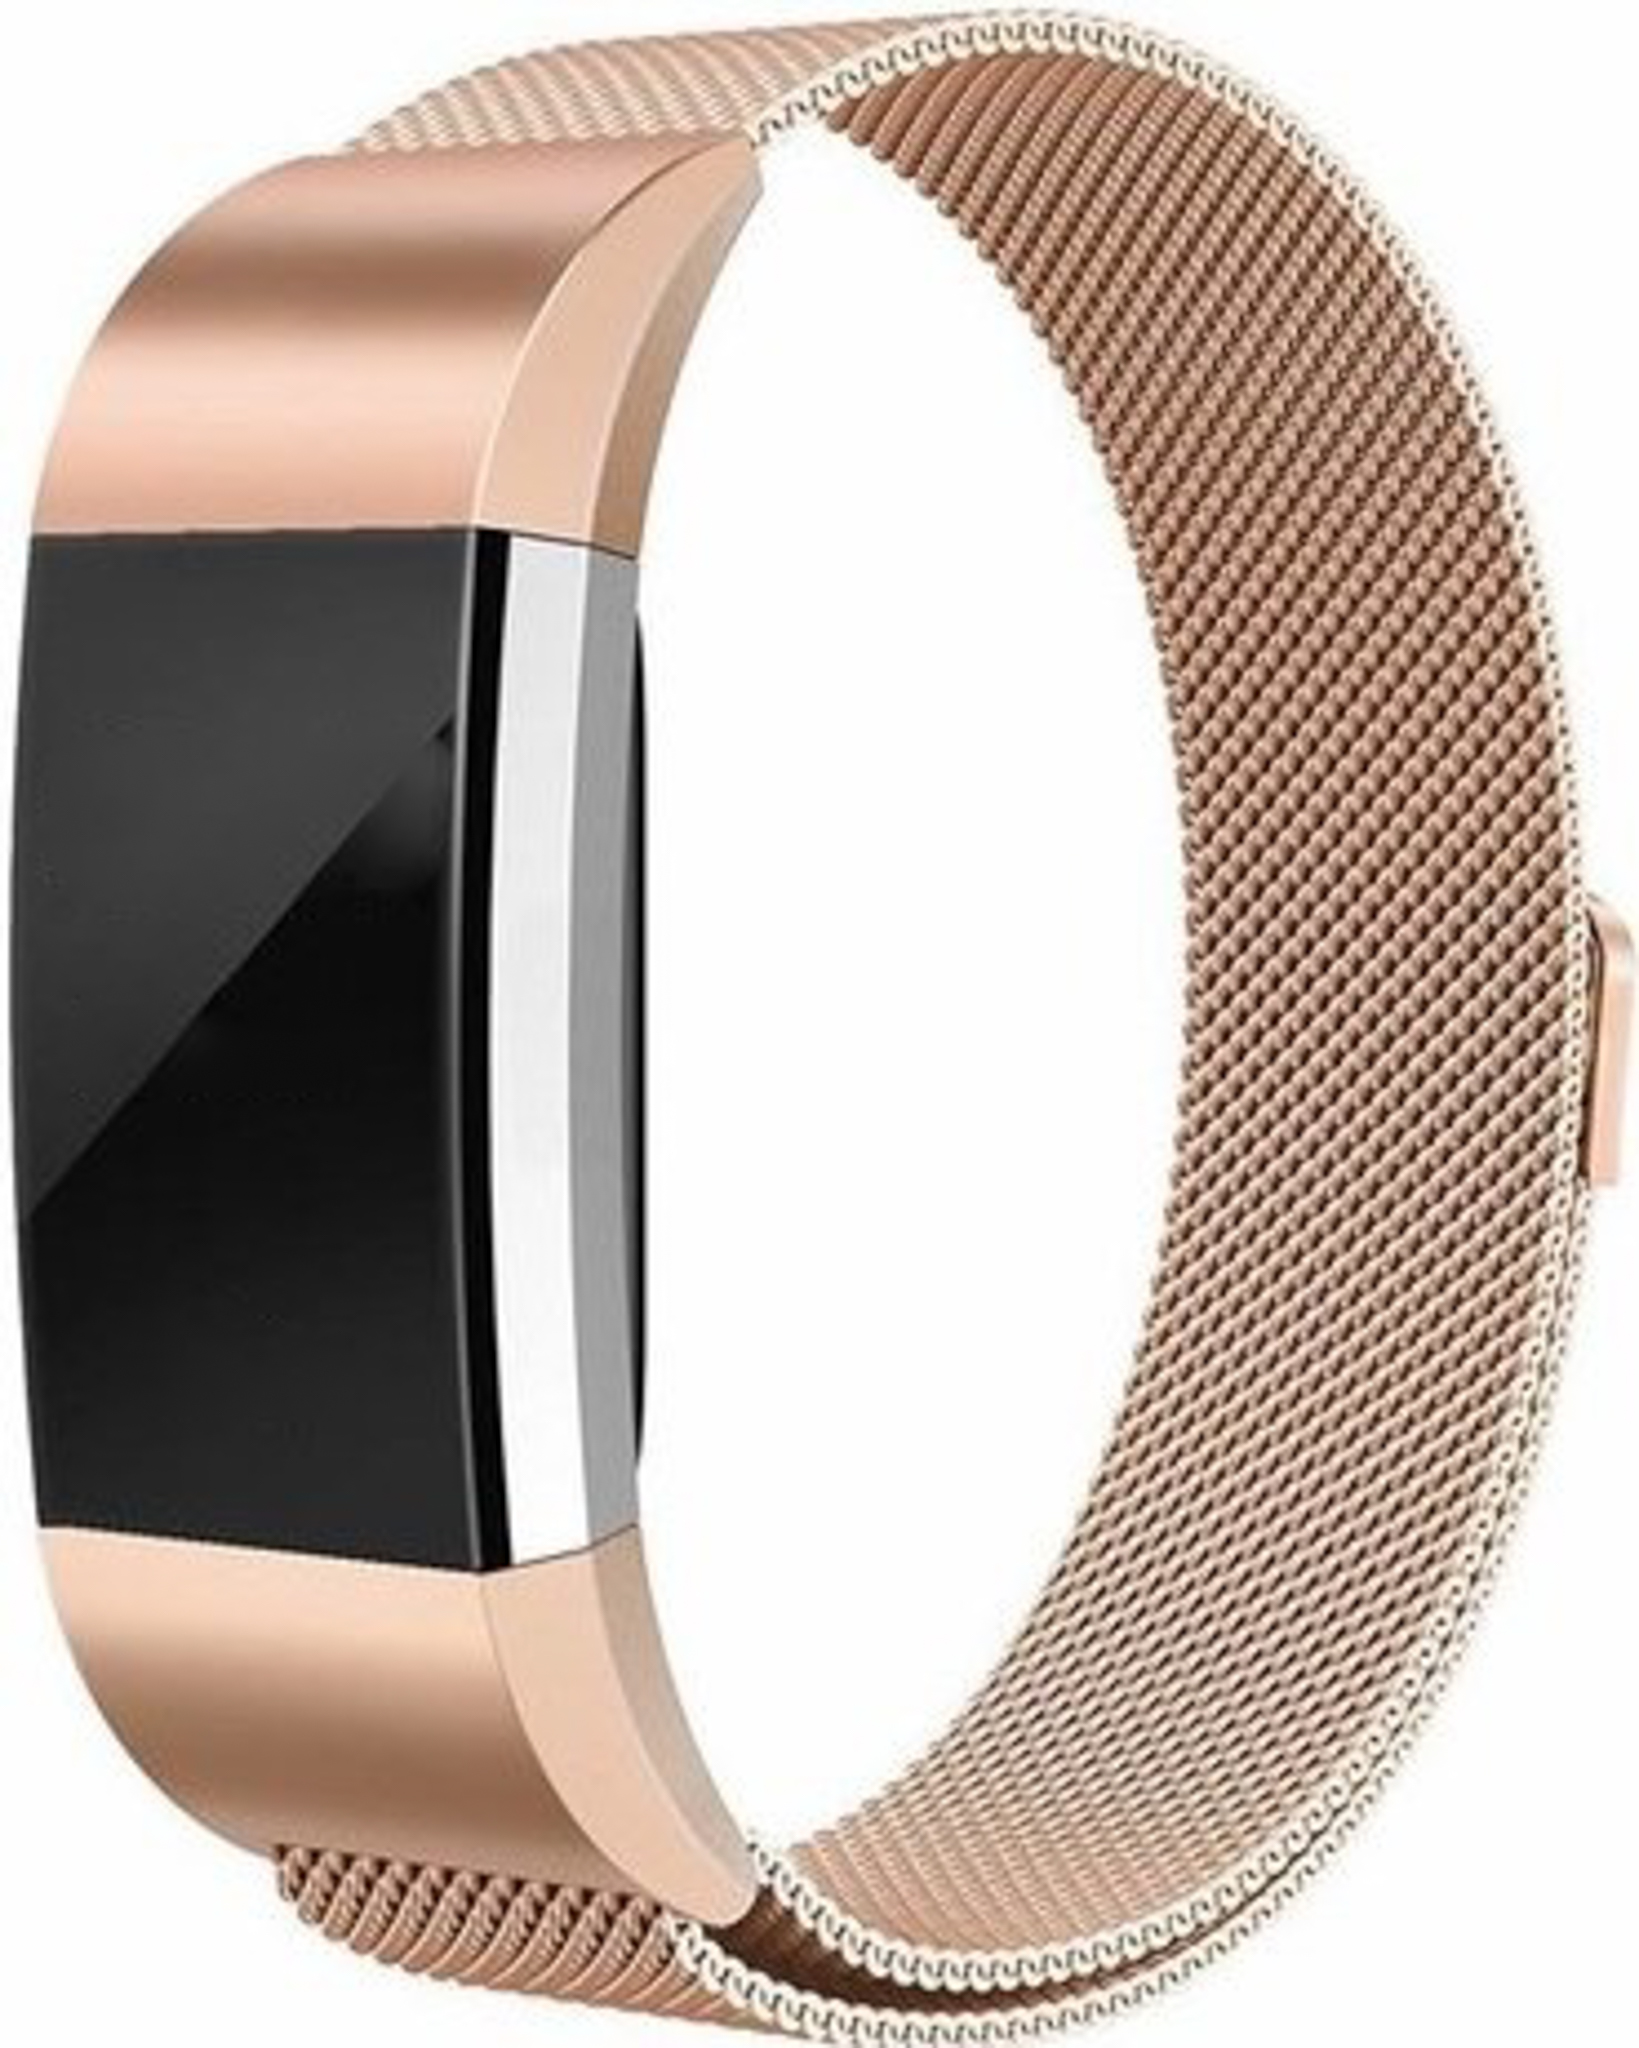 Cinturino loop in maglia milanese per Fitbit Charge 2 - oro rosa